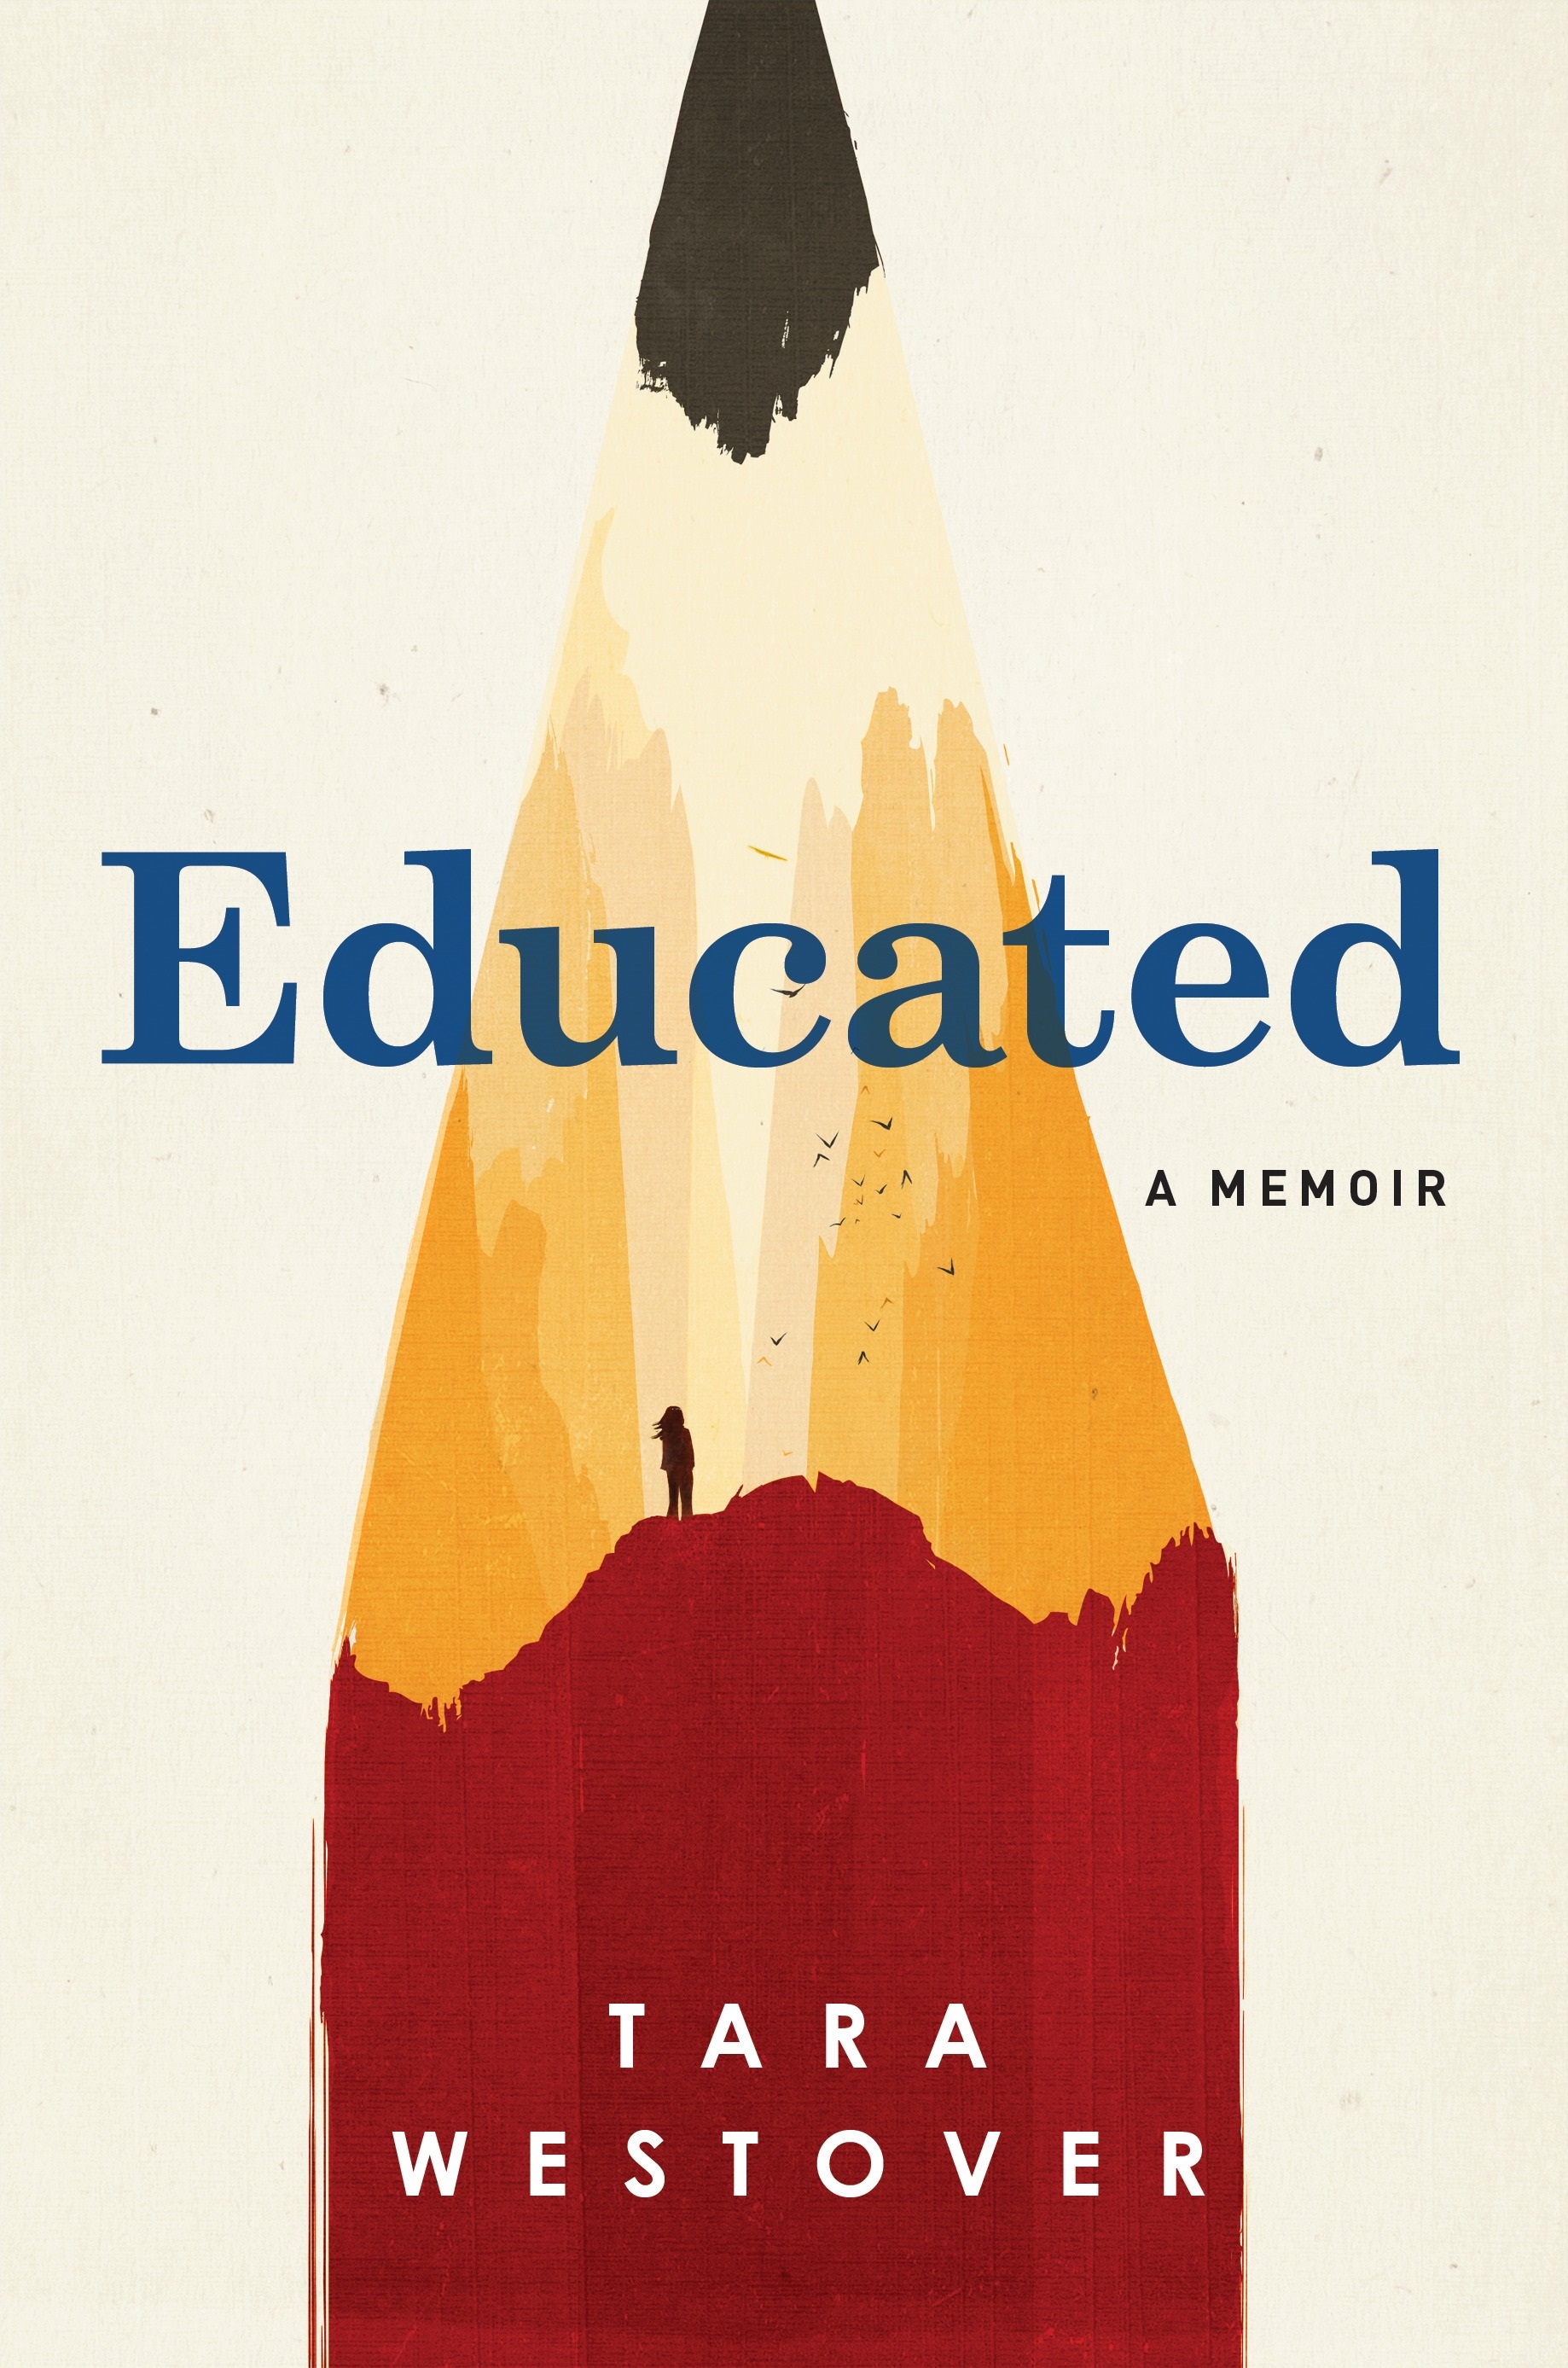 "Educated" by Tara Westover